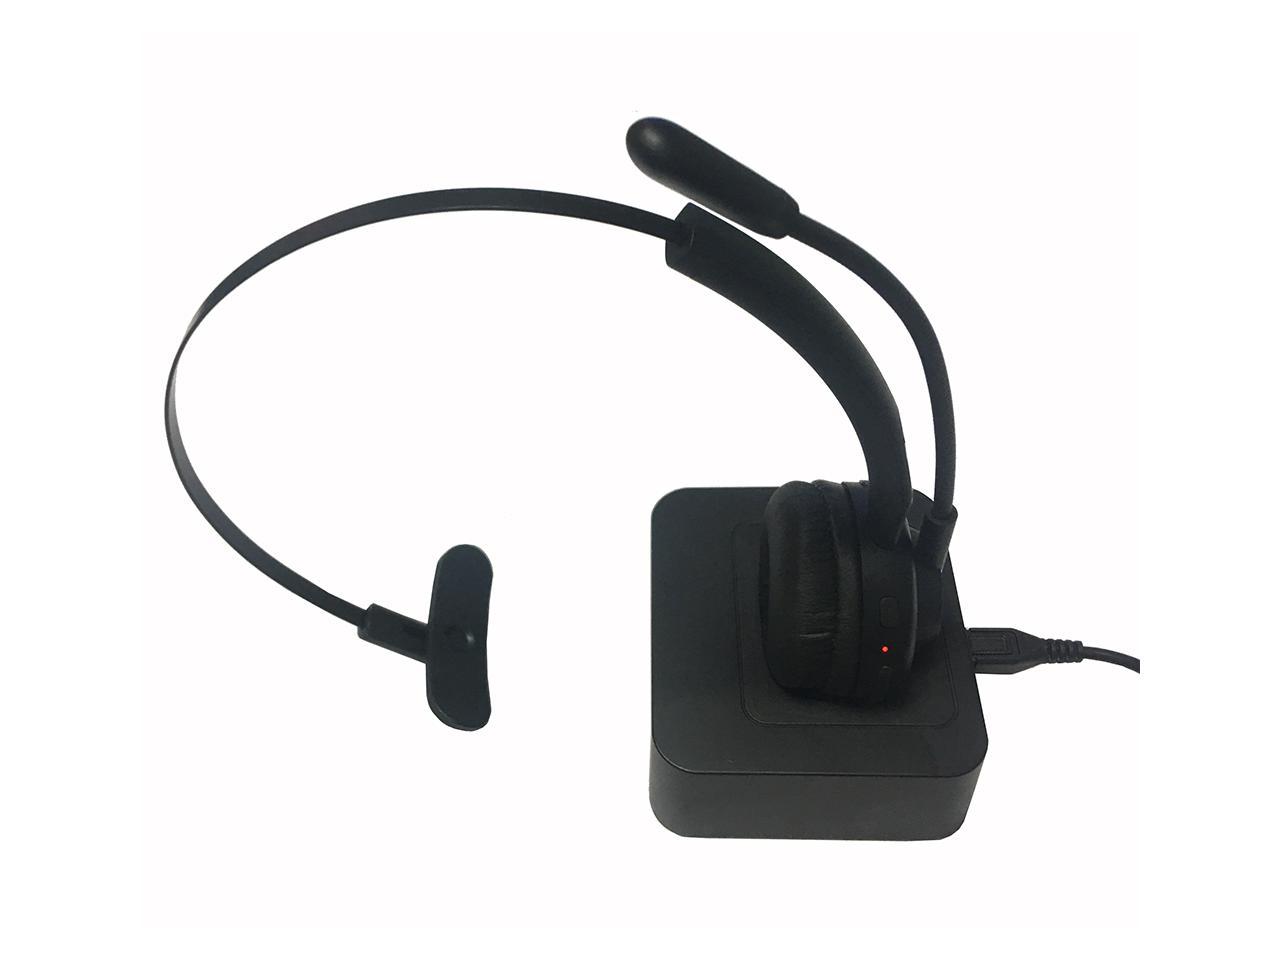 wireless xbox one headset with mic